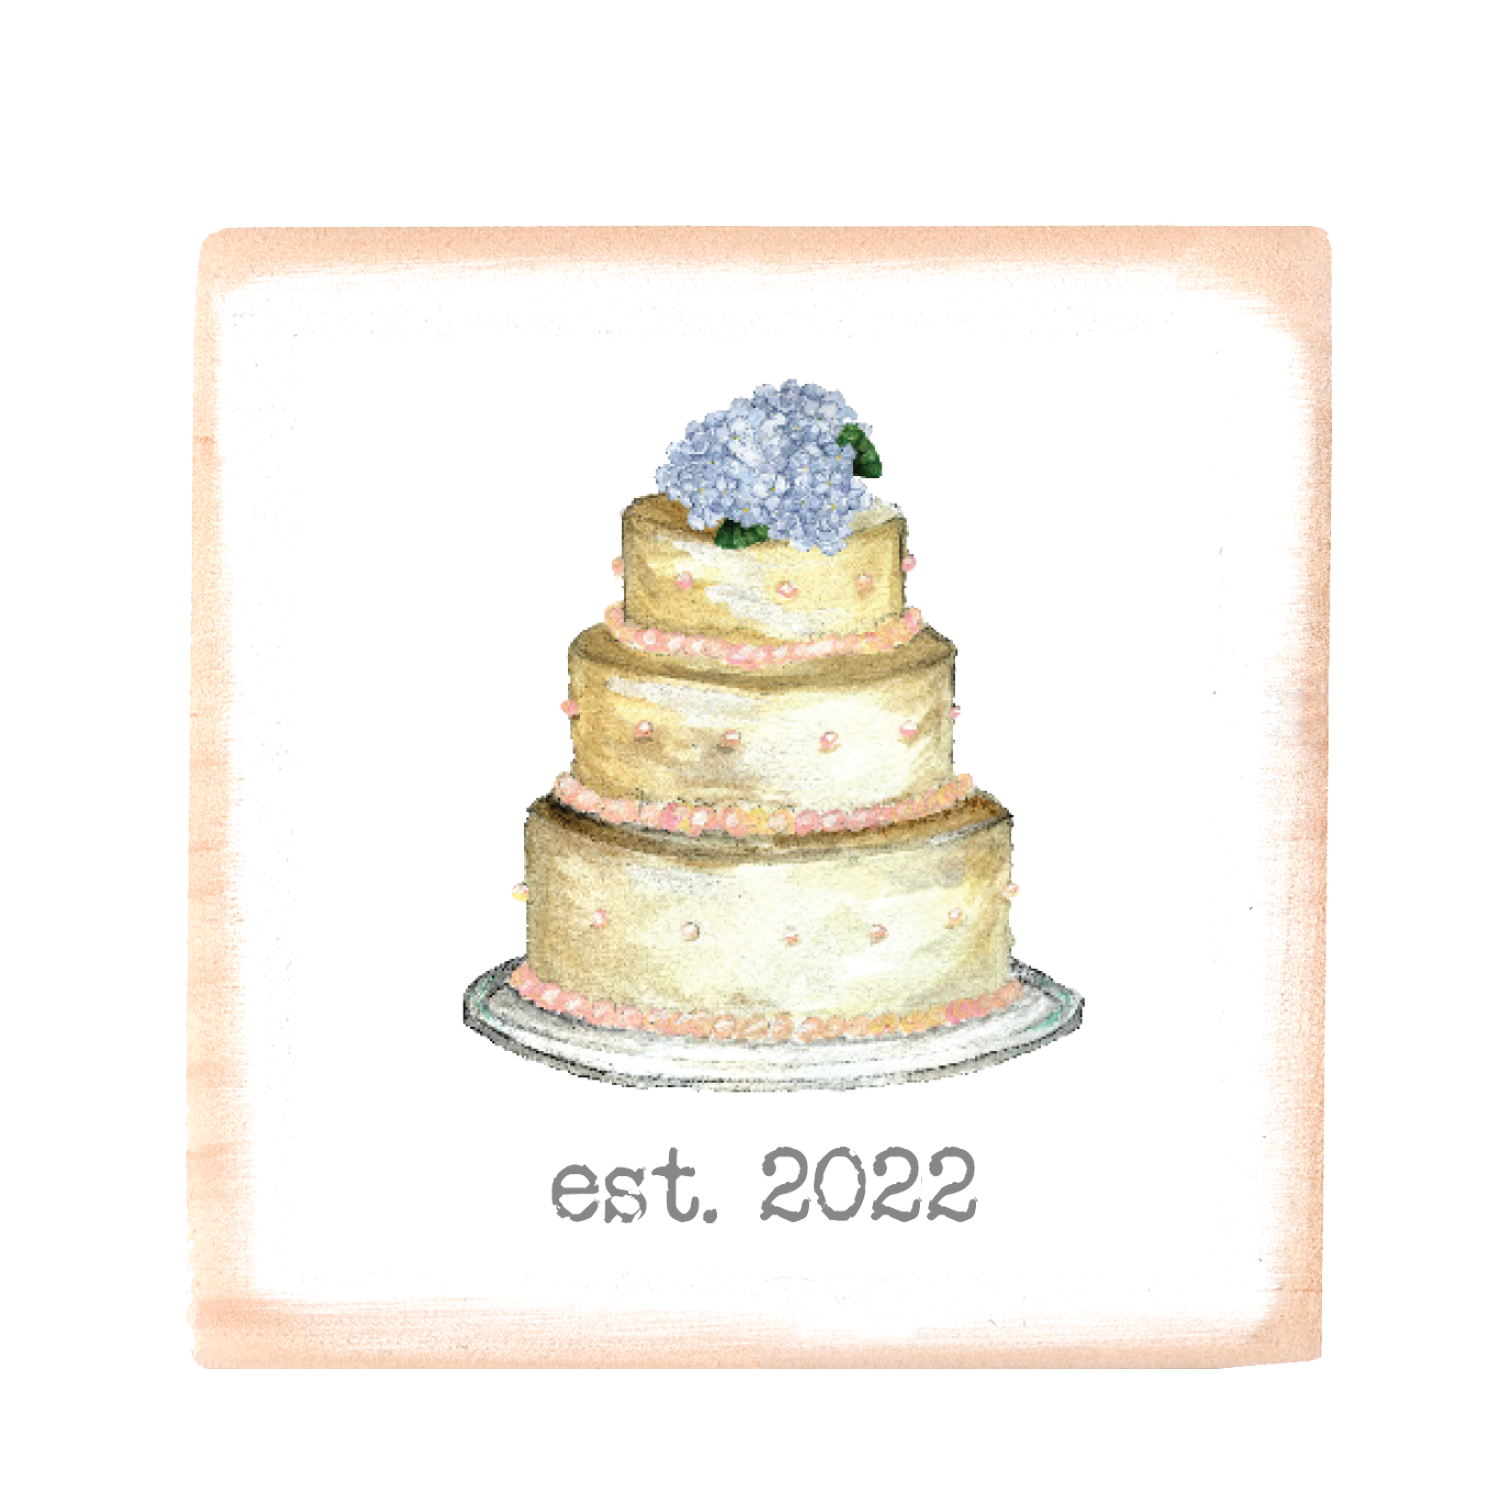 wedding cake date 2022 square wood block